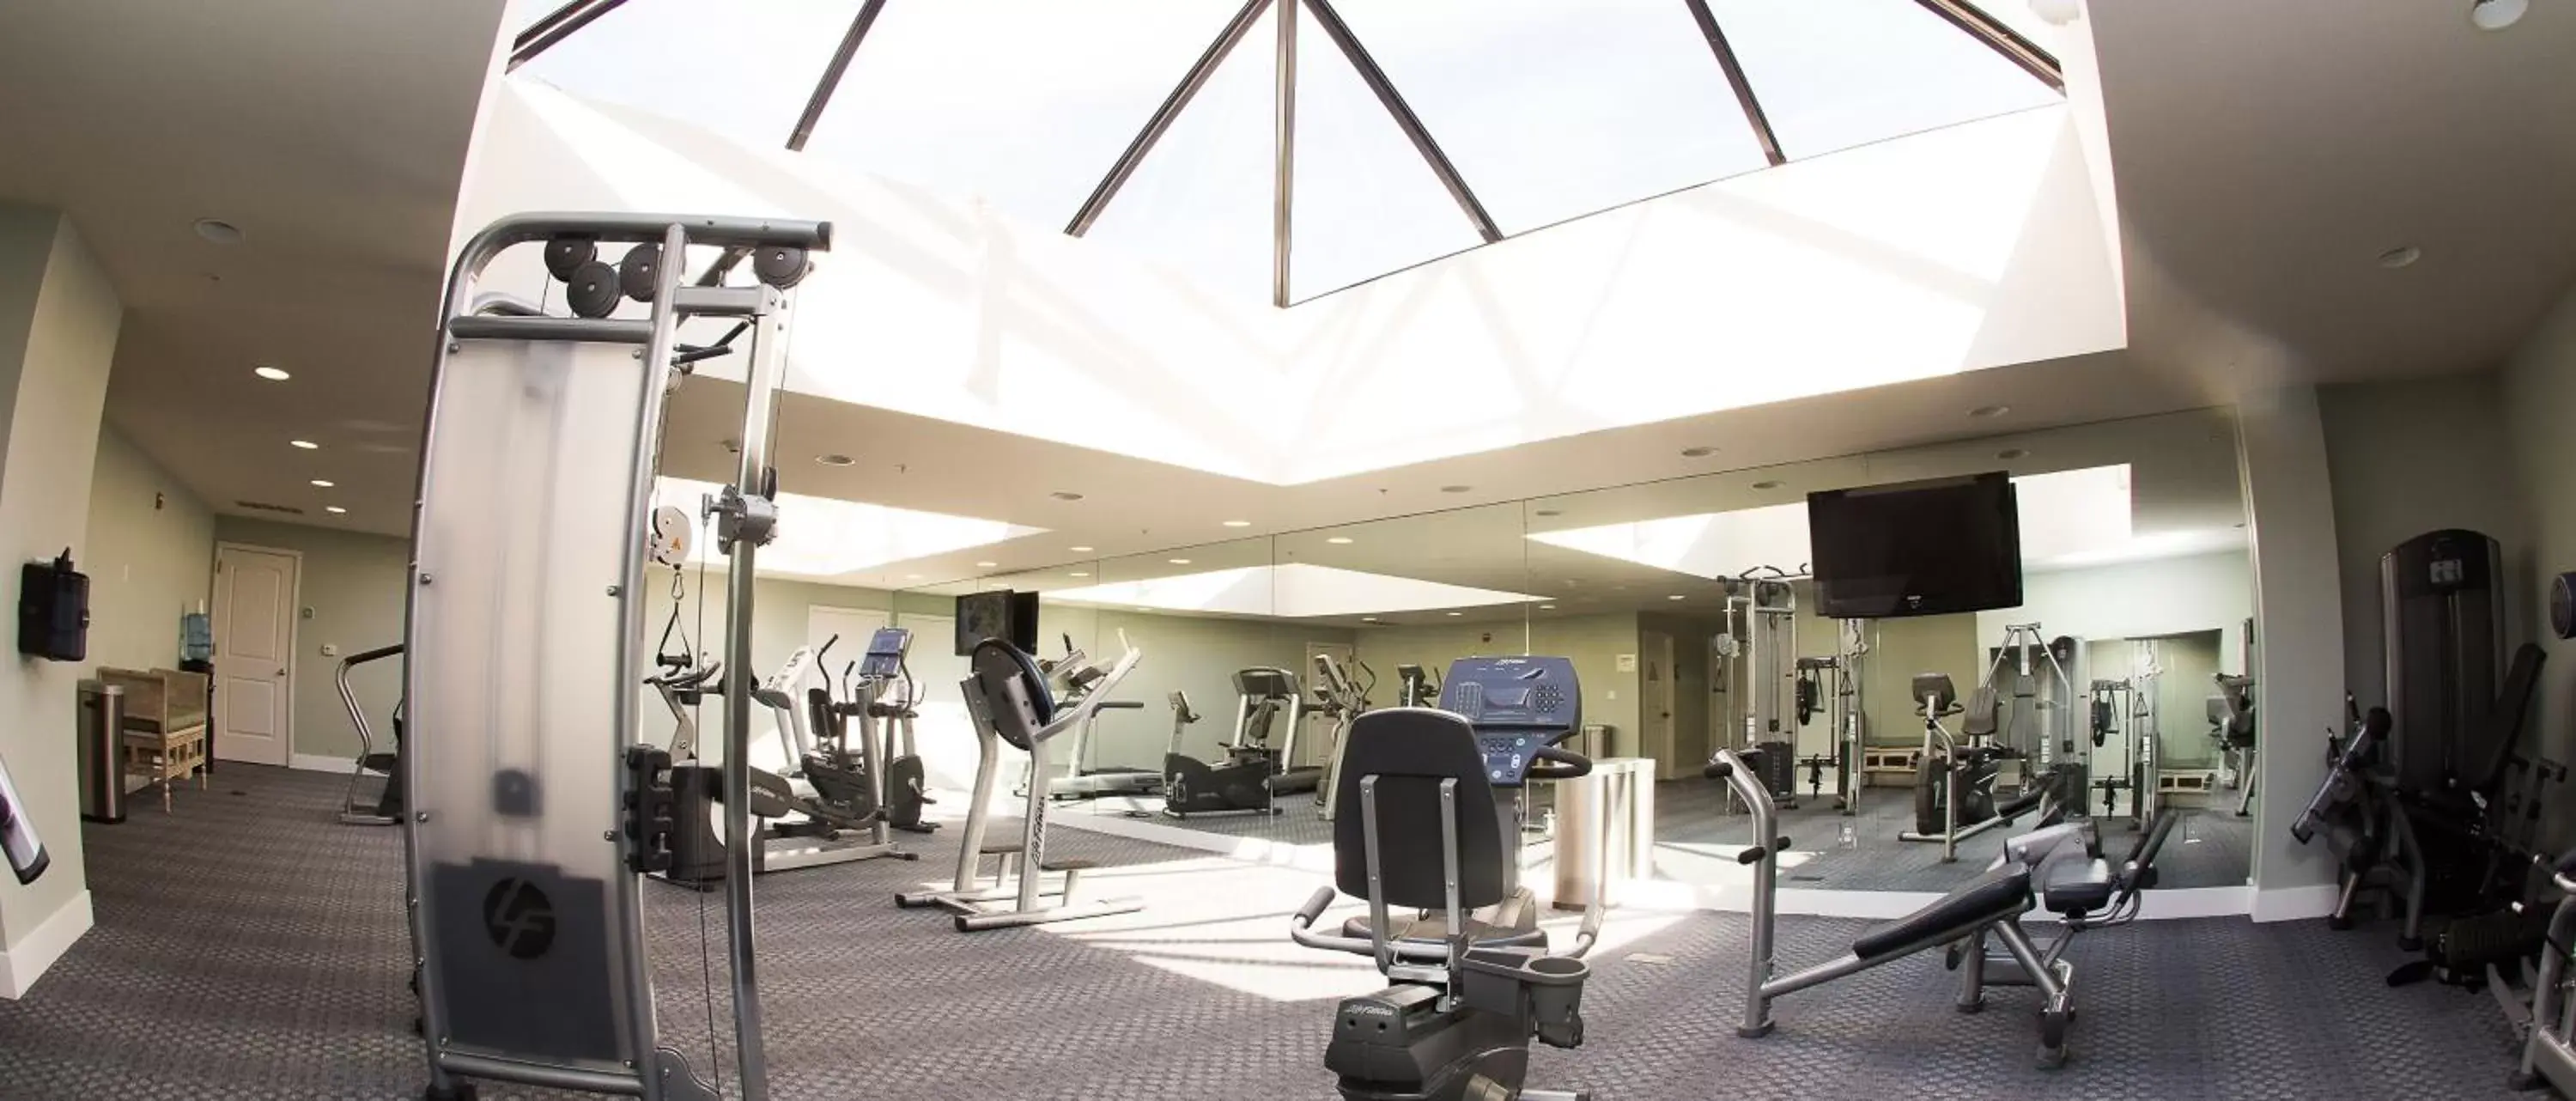 Fitness centre/facilities, Fitness Center/Facilities in Oceano Hotel and Spa Half Moon Bay Harbor